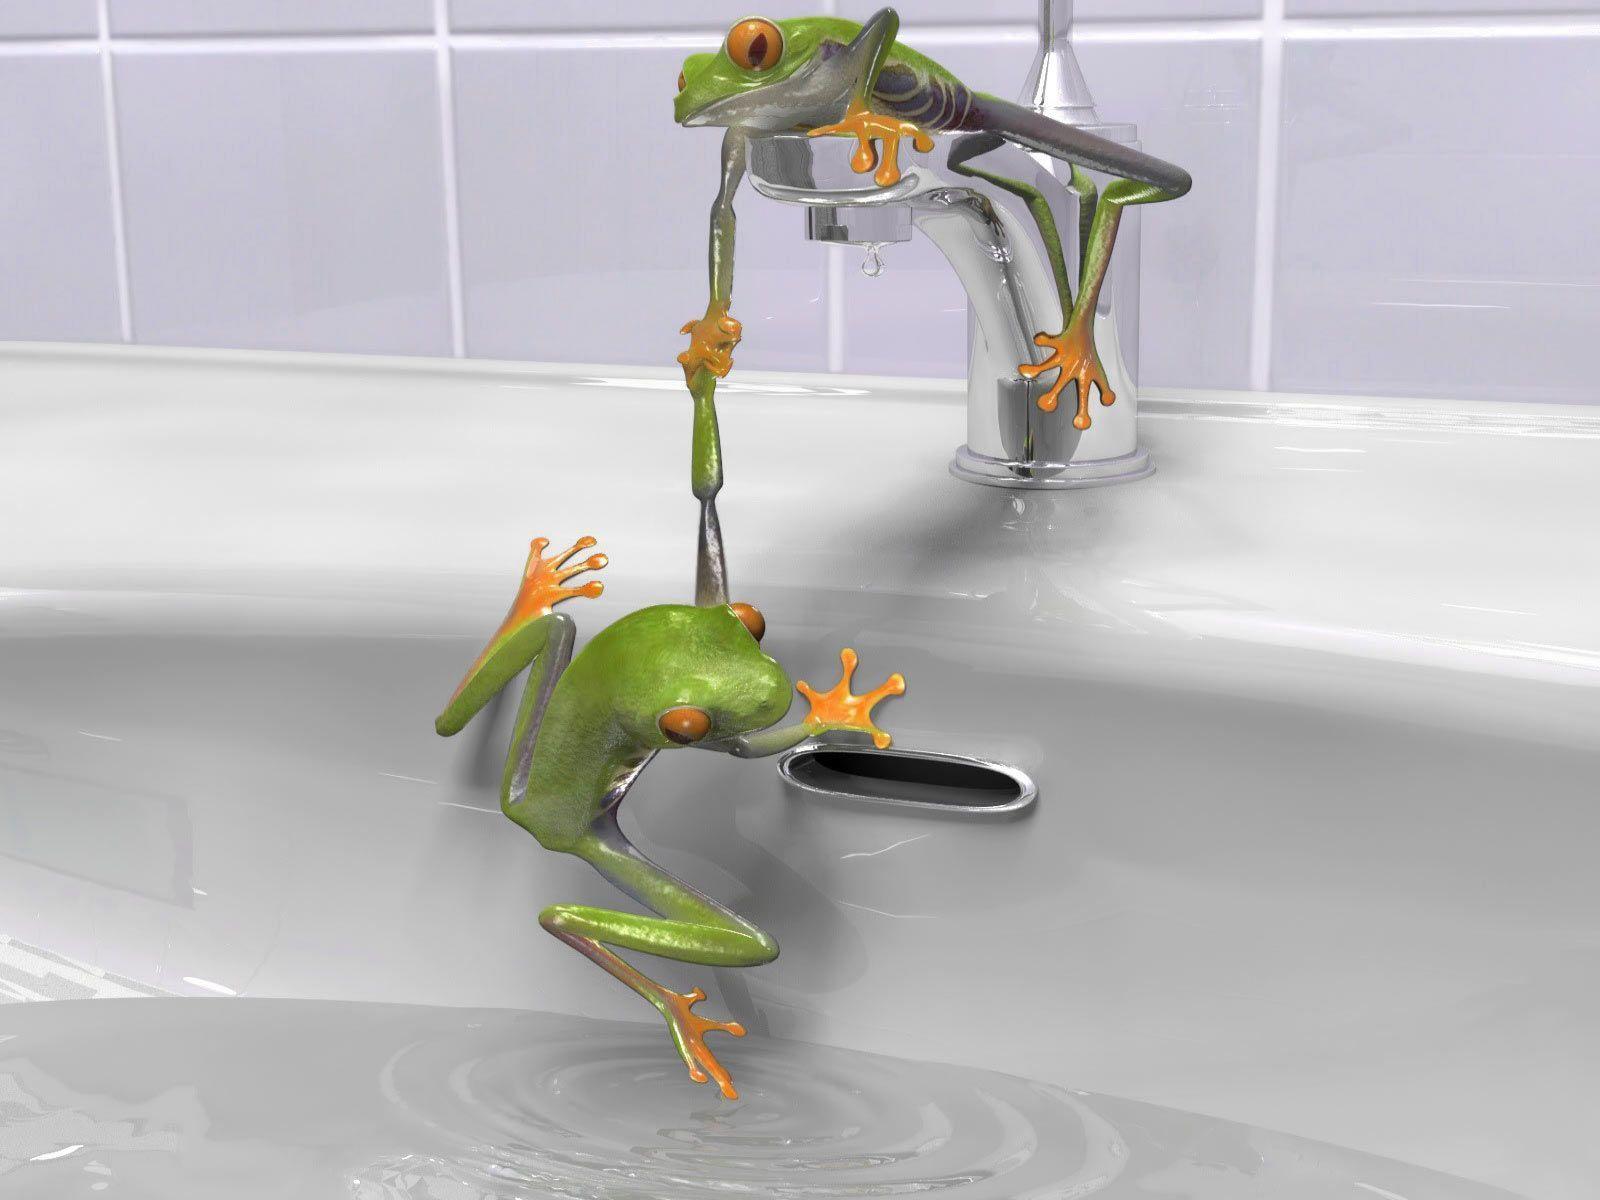 Bathroom Bathtub Cartoon Faucet Frog Frogs Funny Green Water